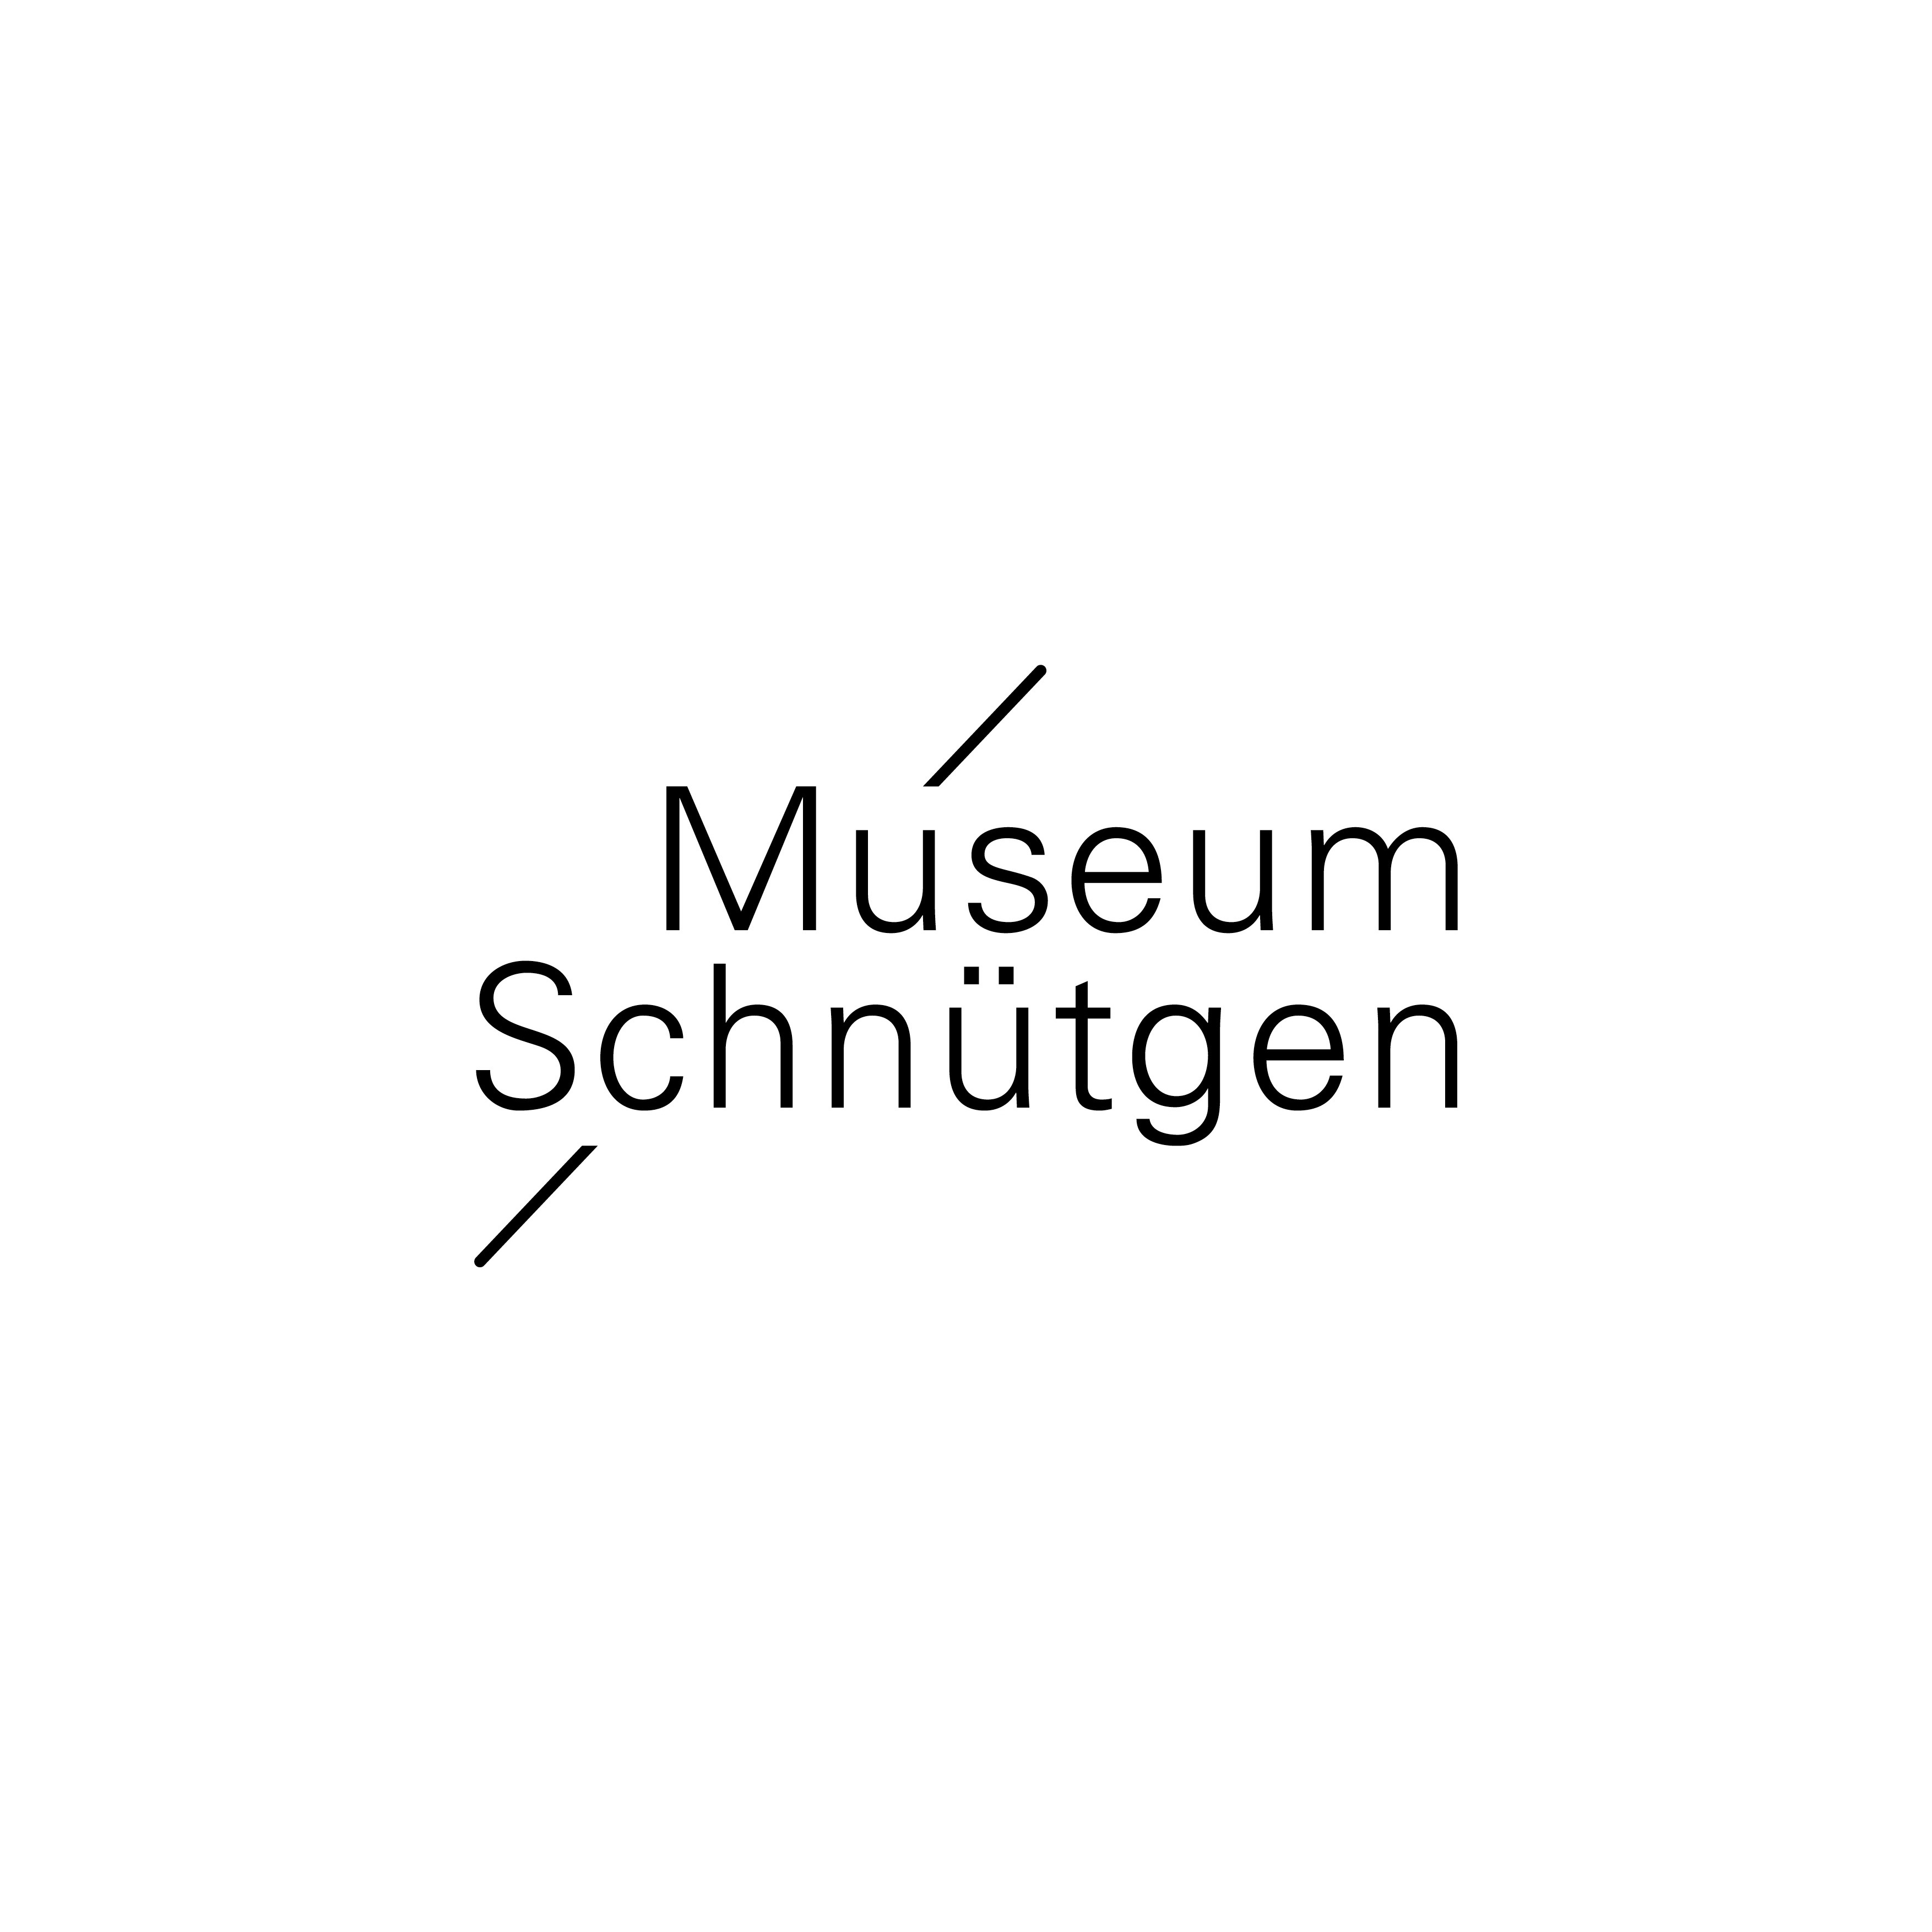 Museum Schnütgen in Köln